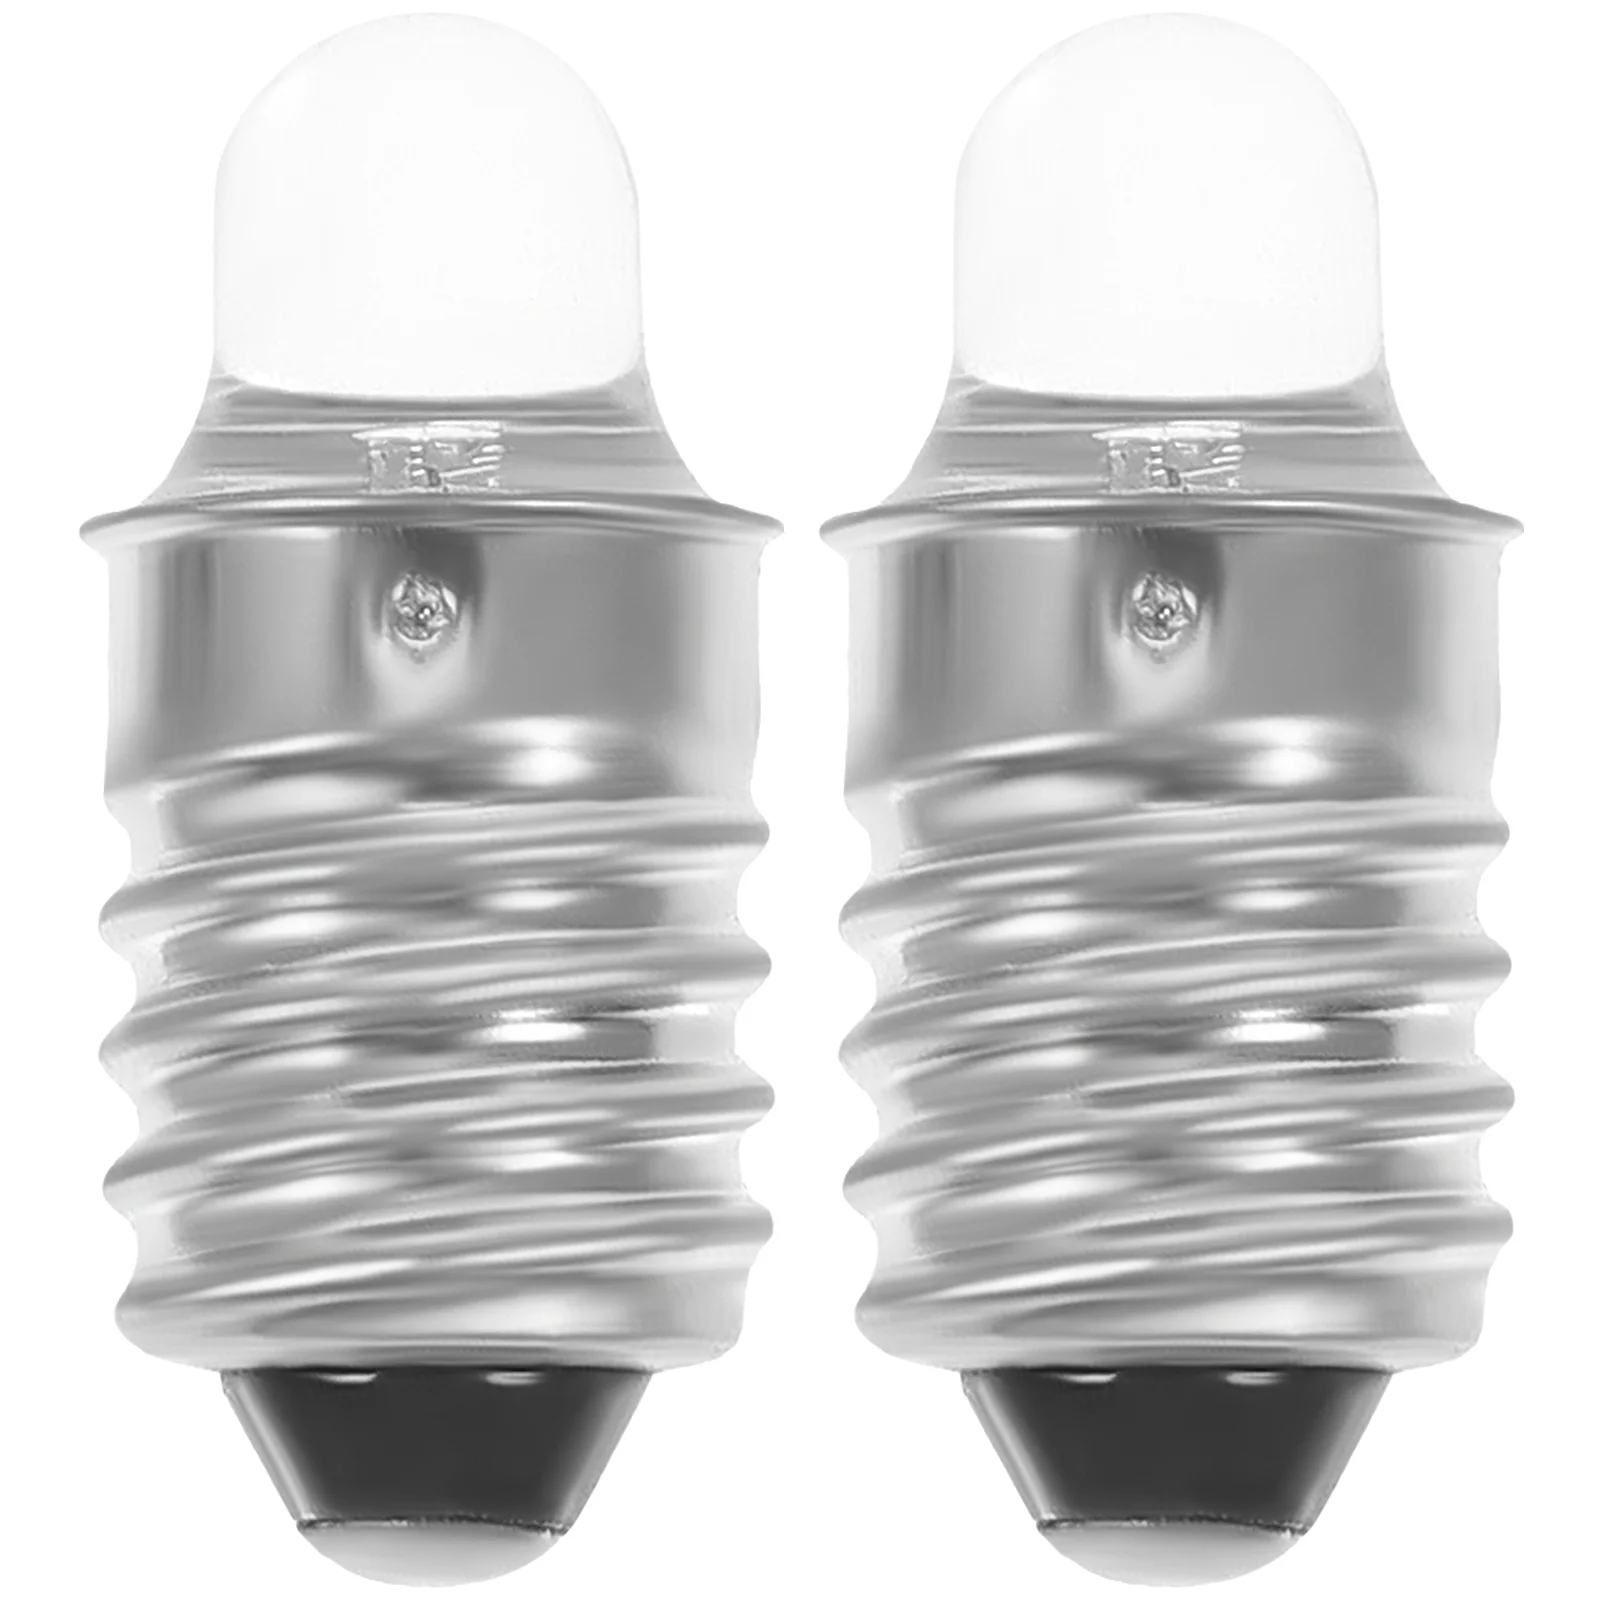 

Bulbs Bulb Light Flashlight Led Mini Tiny Replacementminiature E10 Torch Base Screw Round Lights Changer High Ceilings 3V Volt